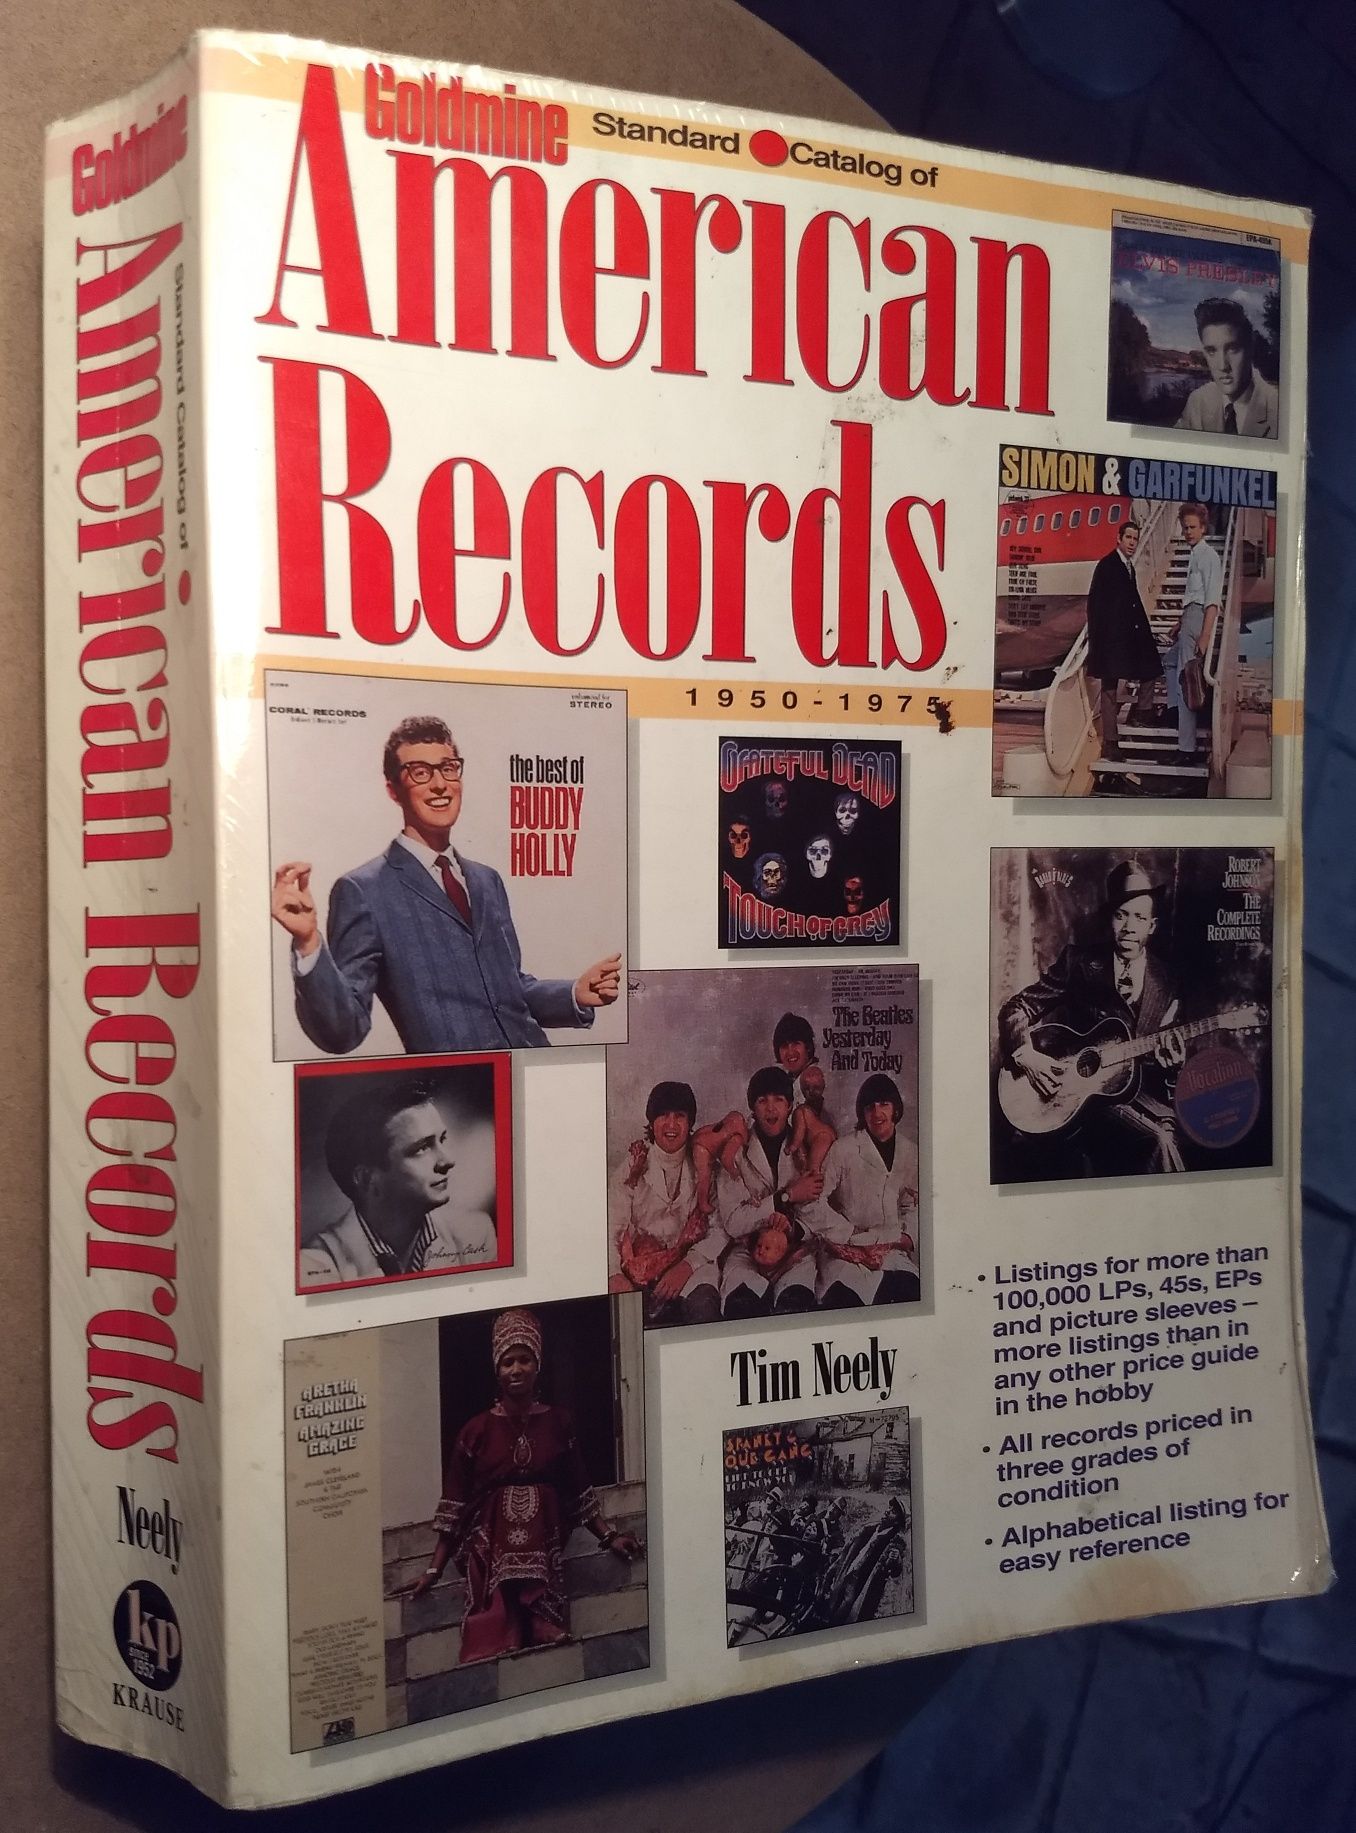 American Records (Anos 50 até 70) - Goldmine Vinyl price guide